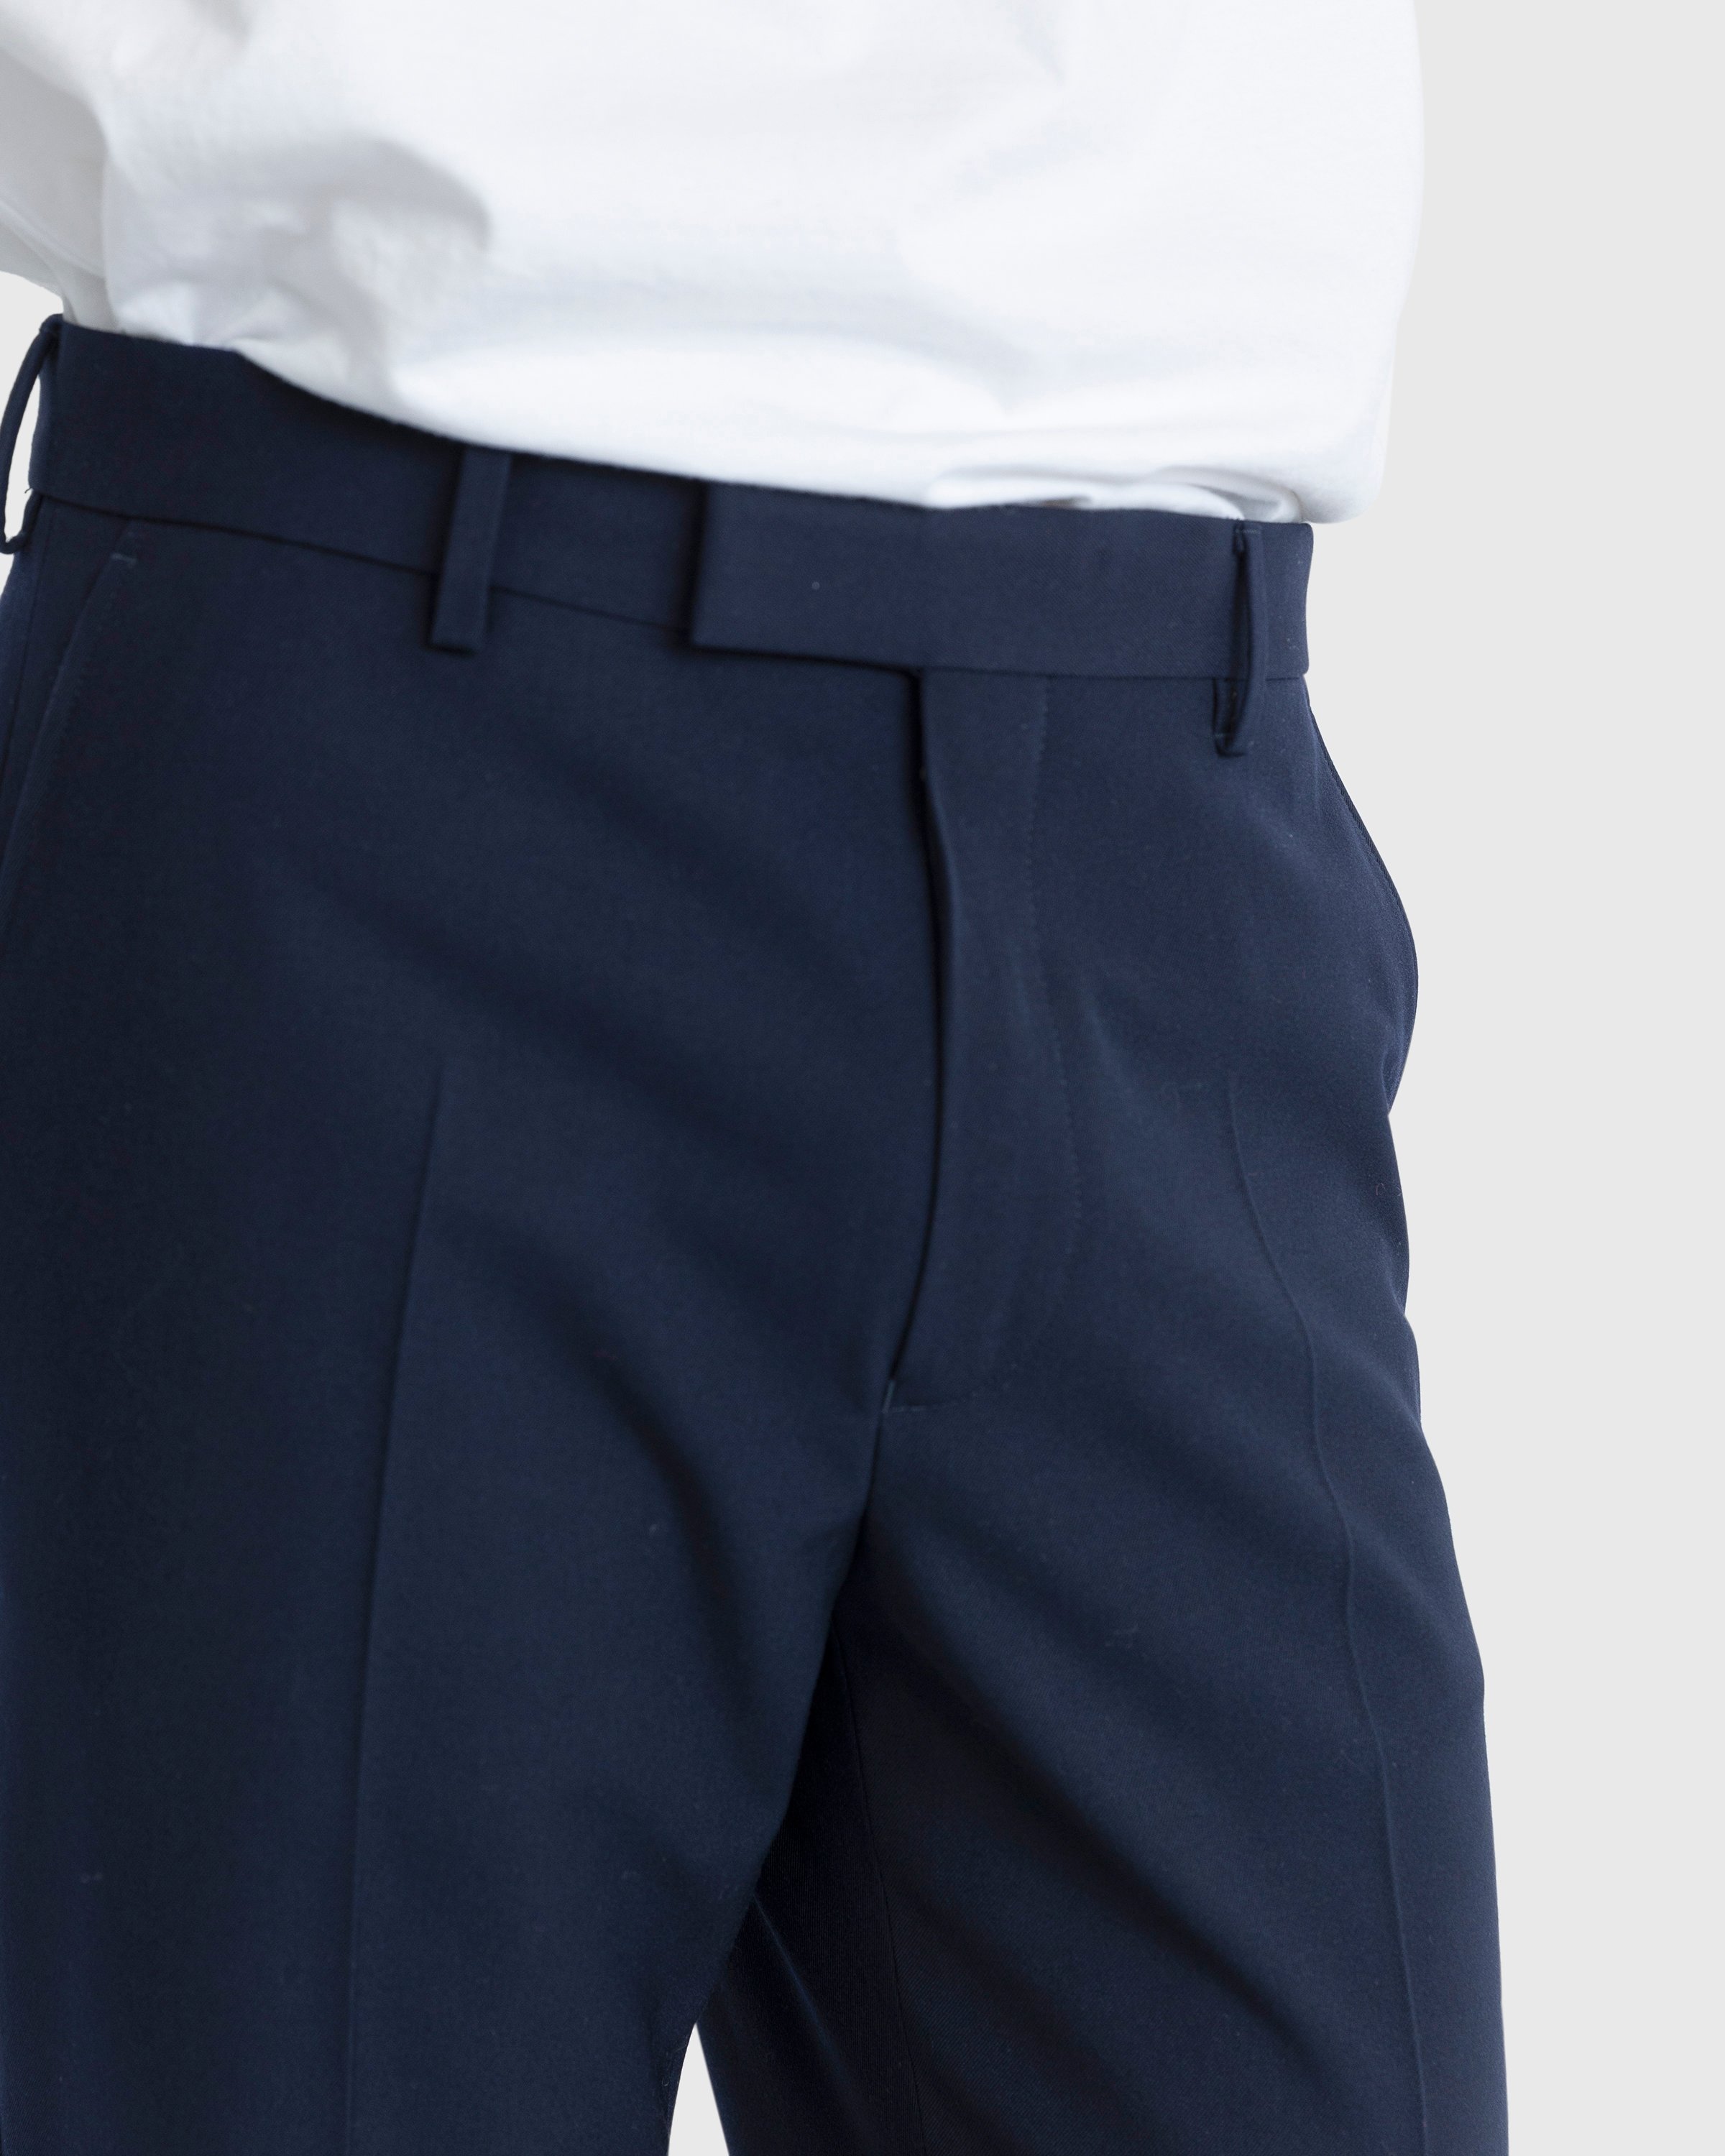 Dries van Noten - Pinnet Long Pants Blue - Clothing - Blue - Image 5